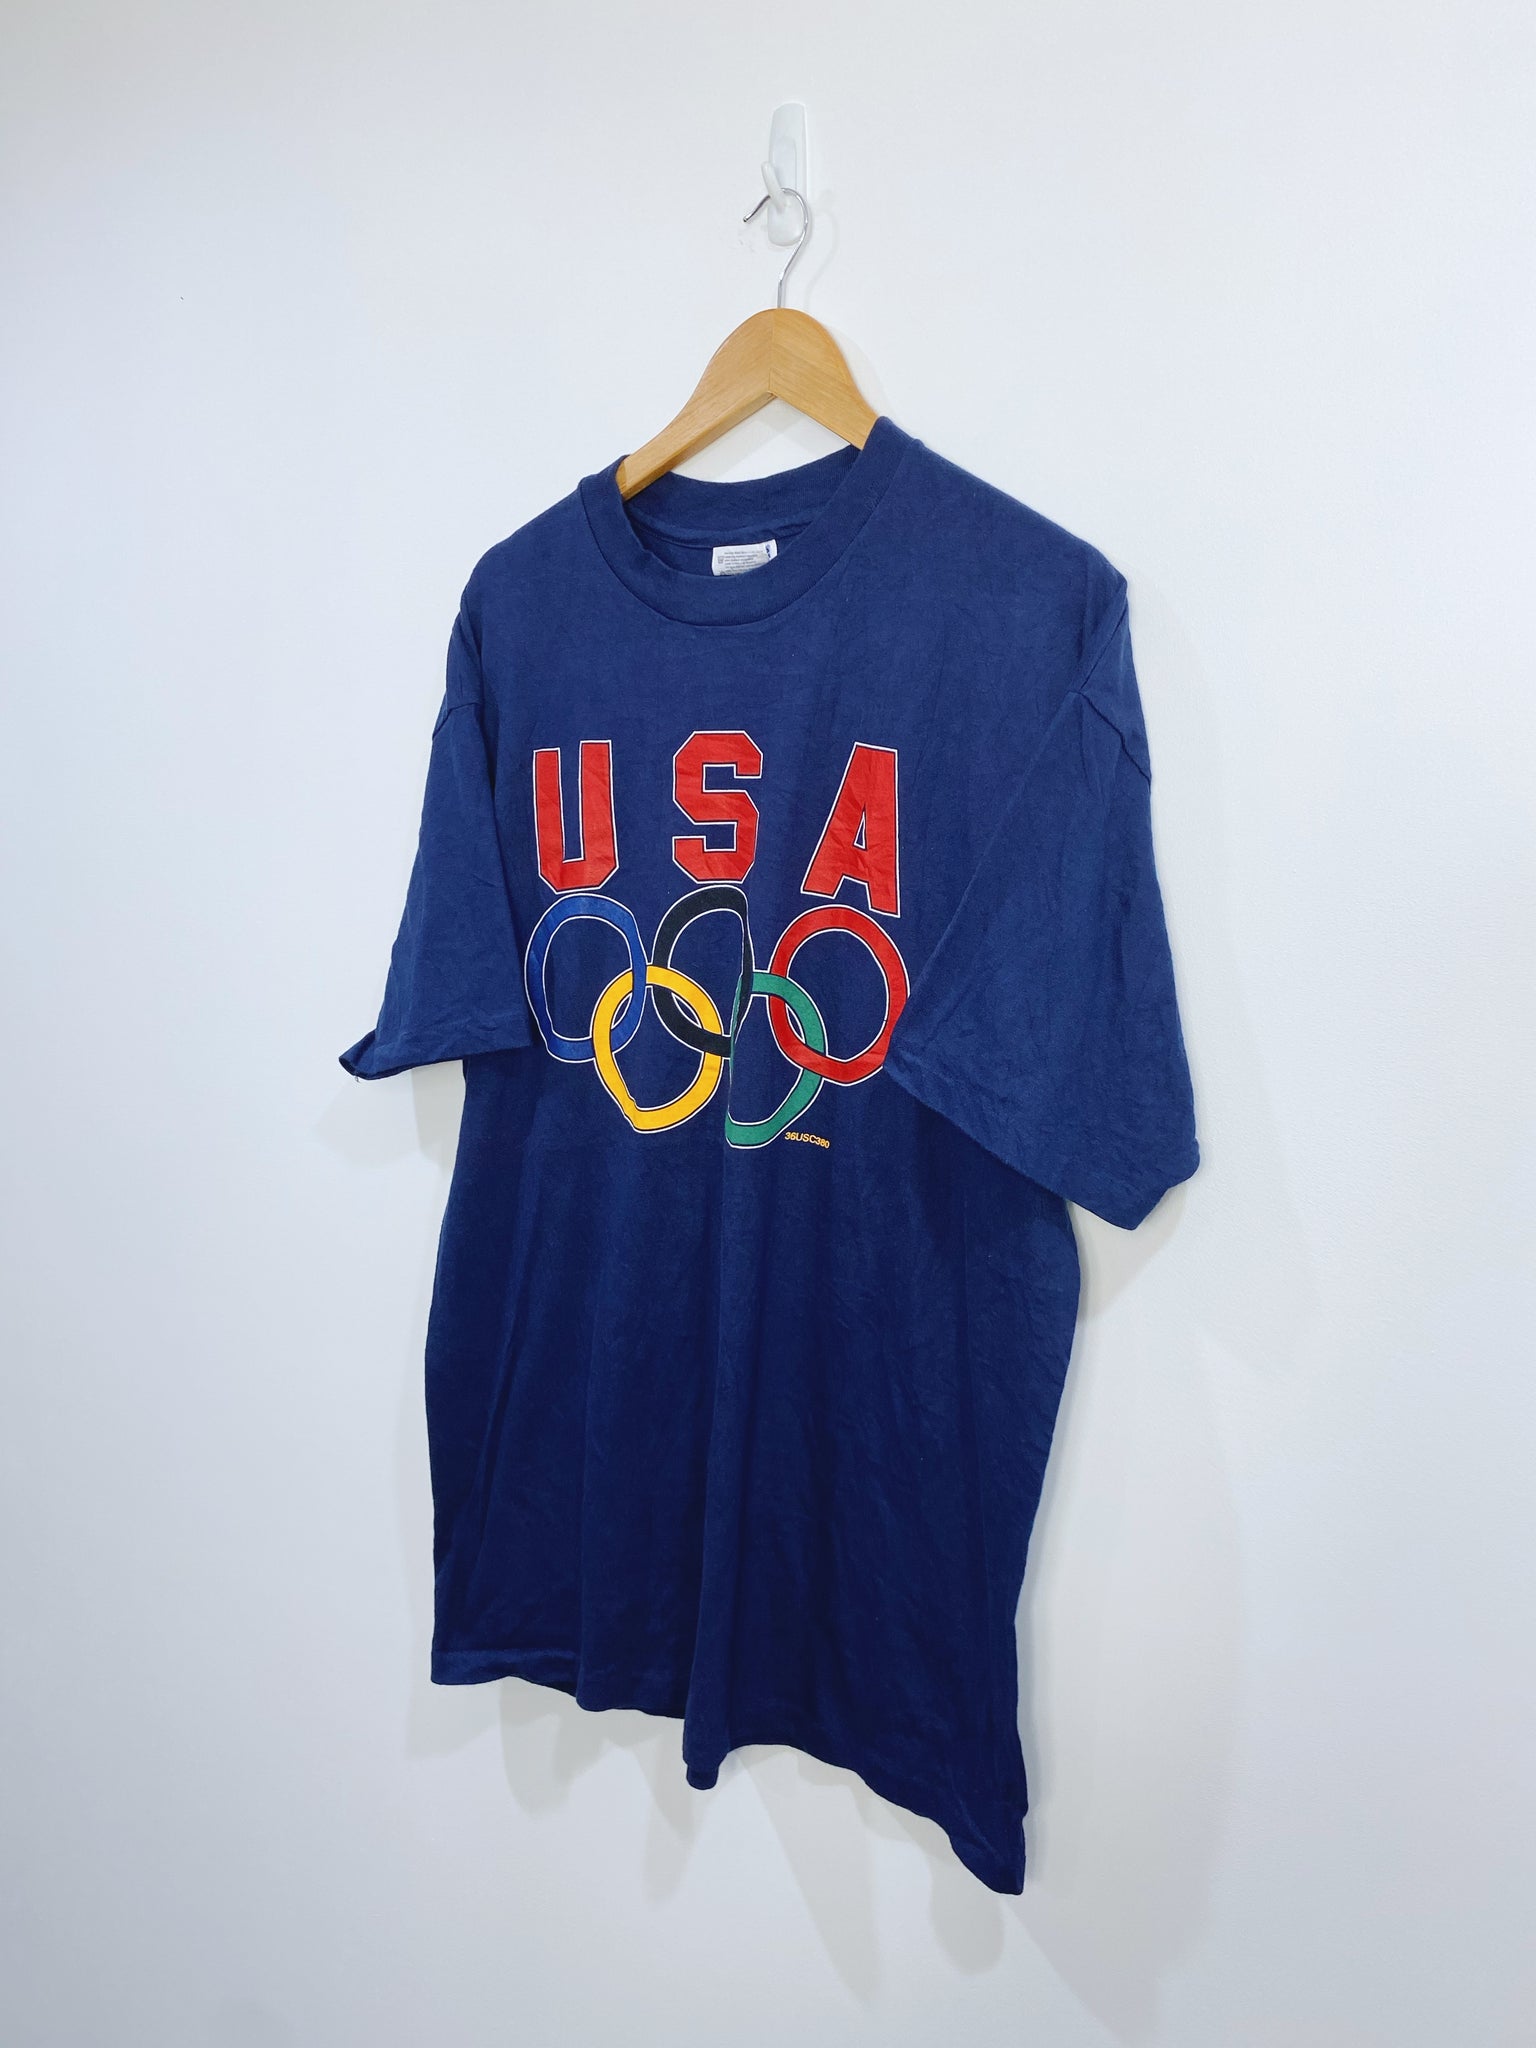 Vintage 1996 USA Olympics T-shirt L